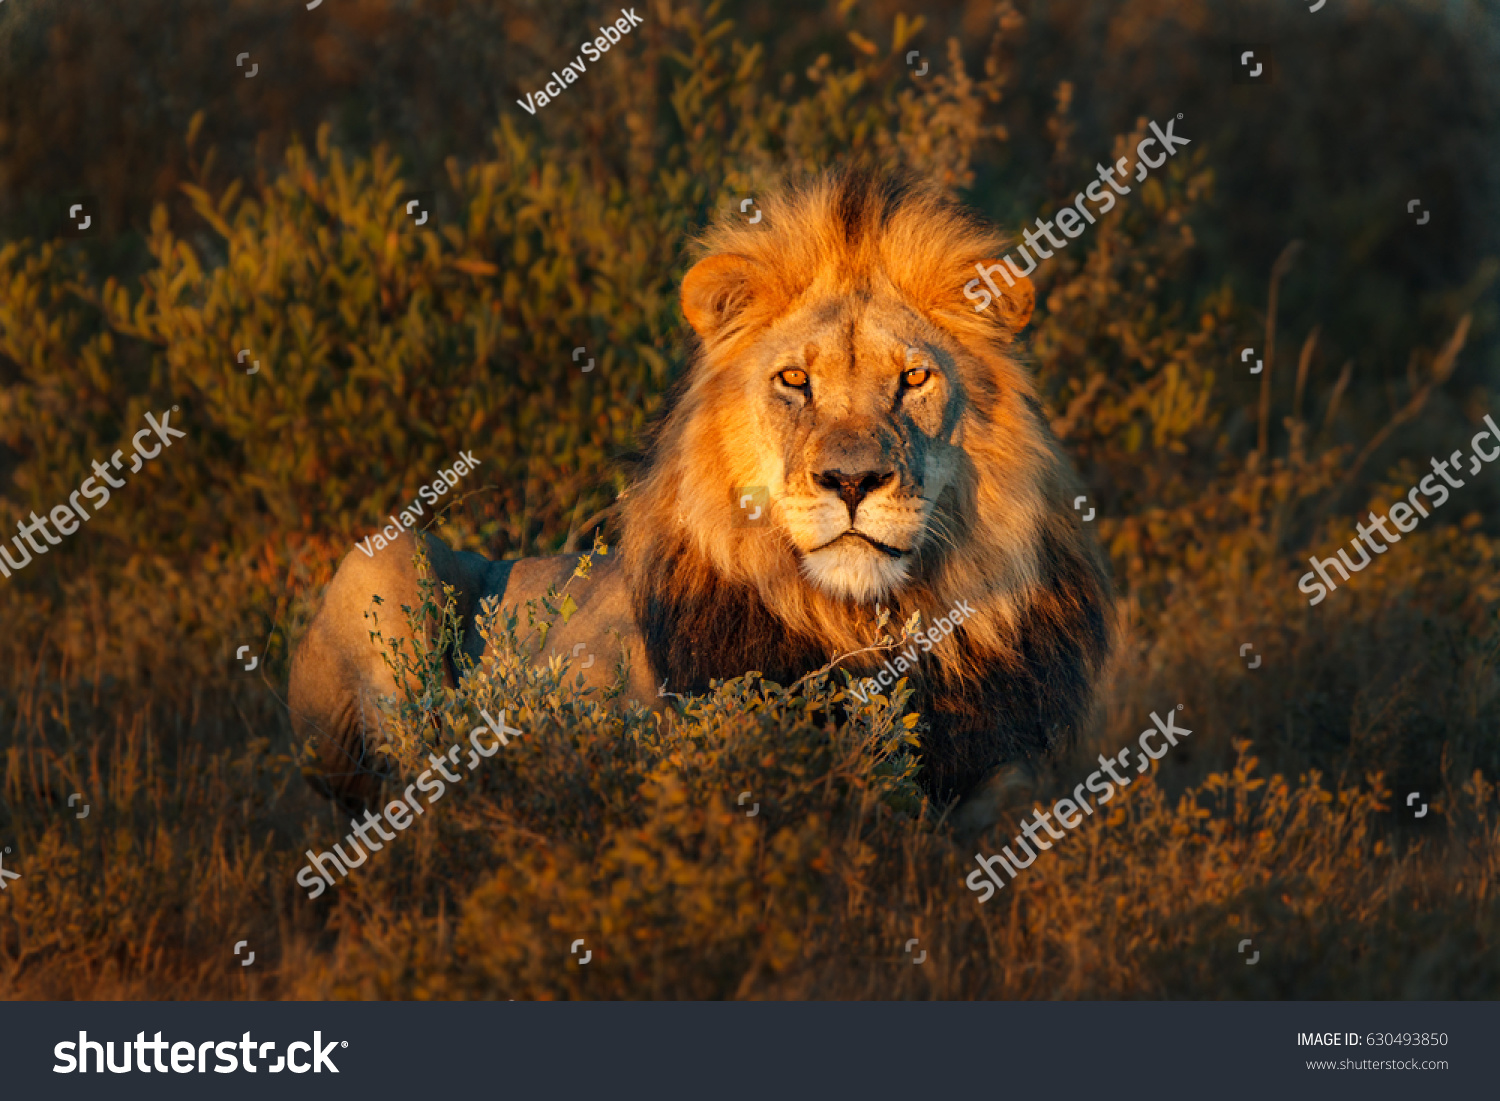 Lion(Panthera leo) #630493850